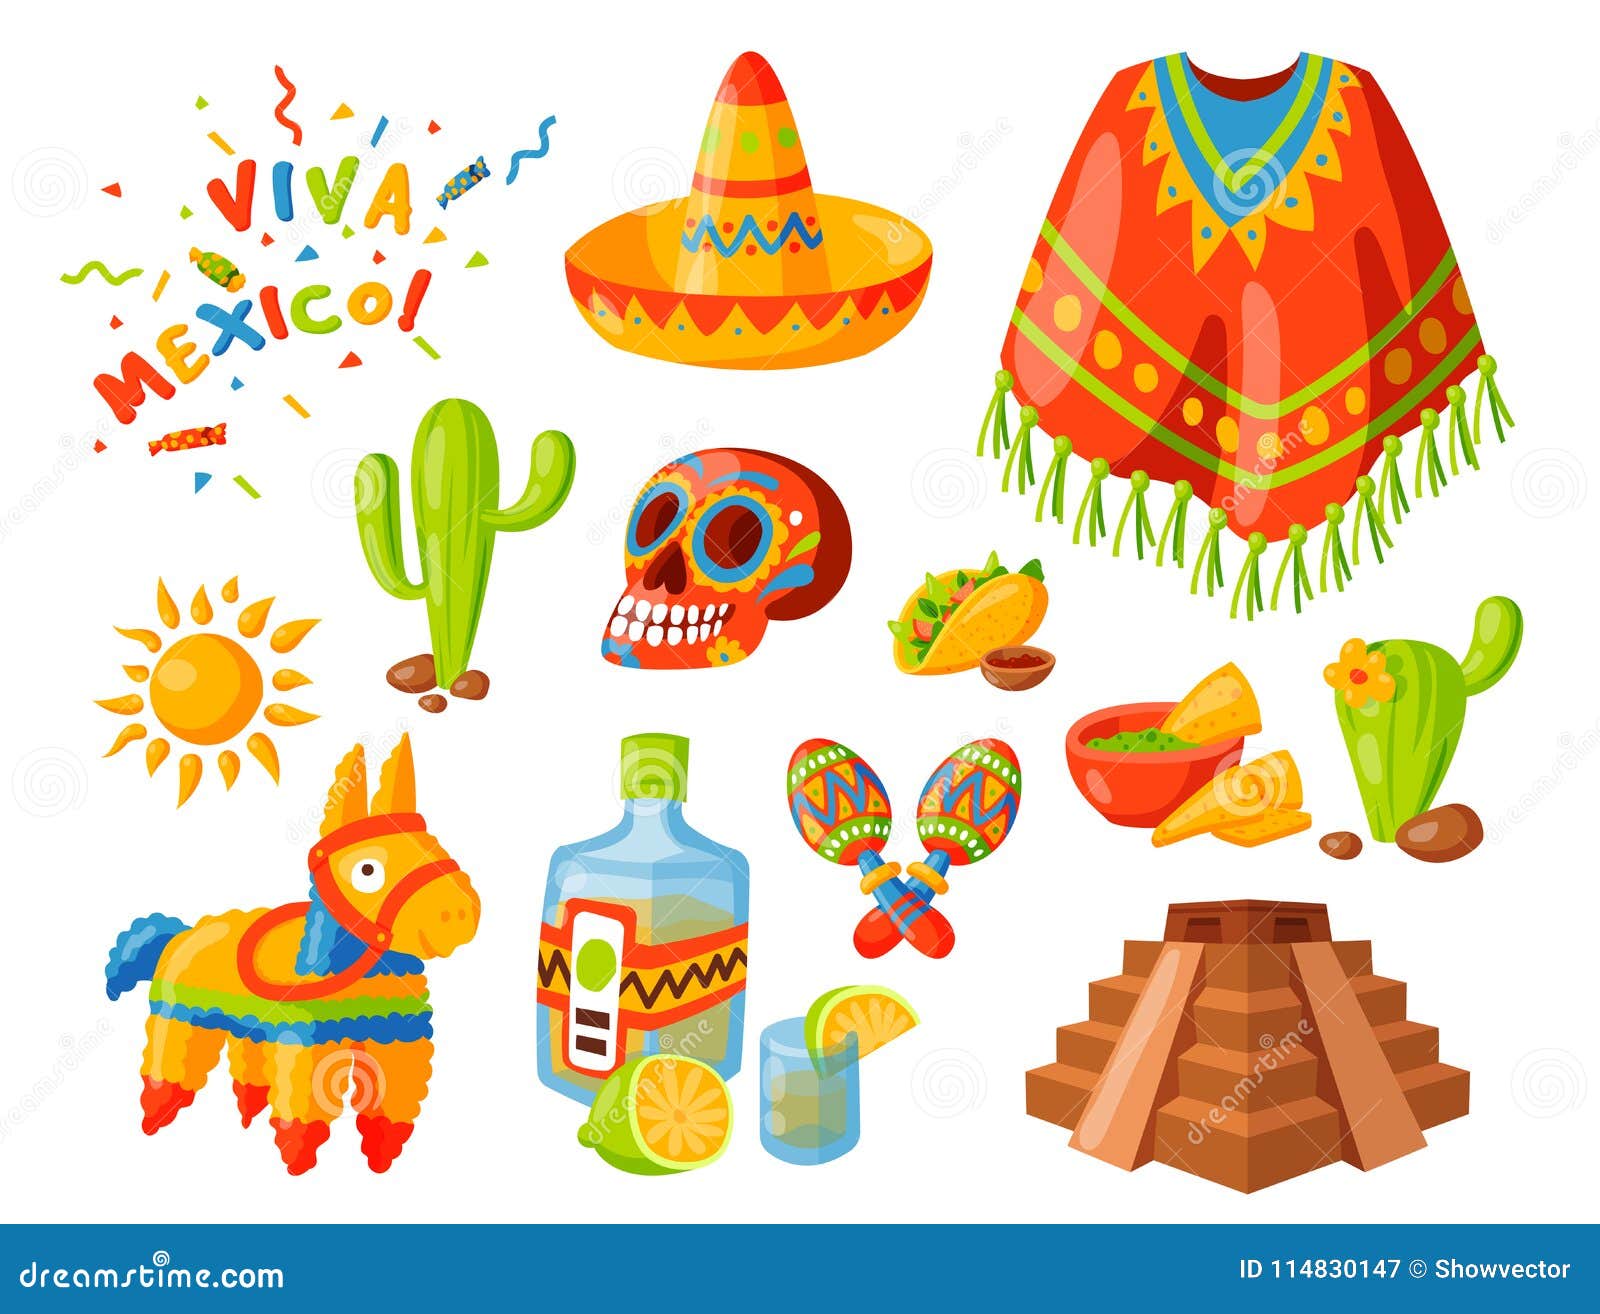 mexico icons   traditional graphic travel tequila alcohol fiesta drink ethnicity aztec maraca sombrero